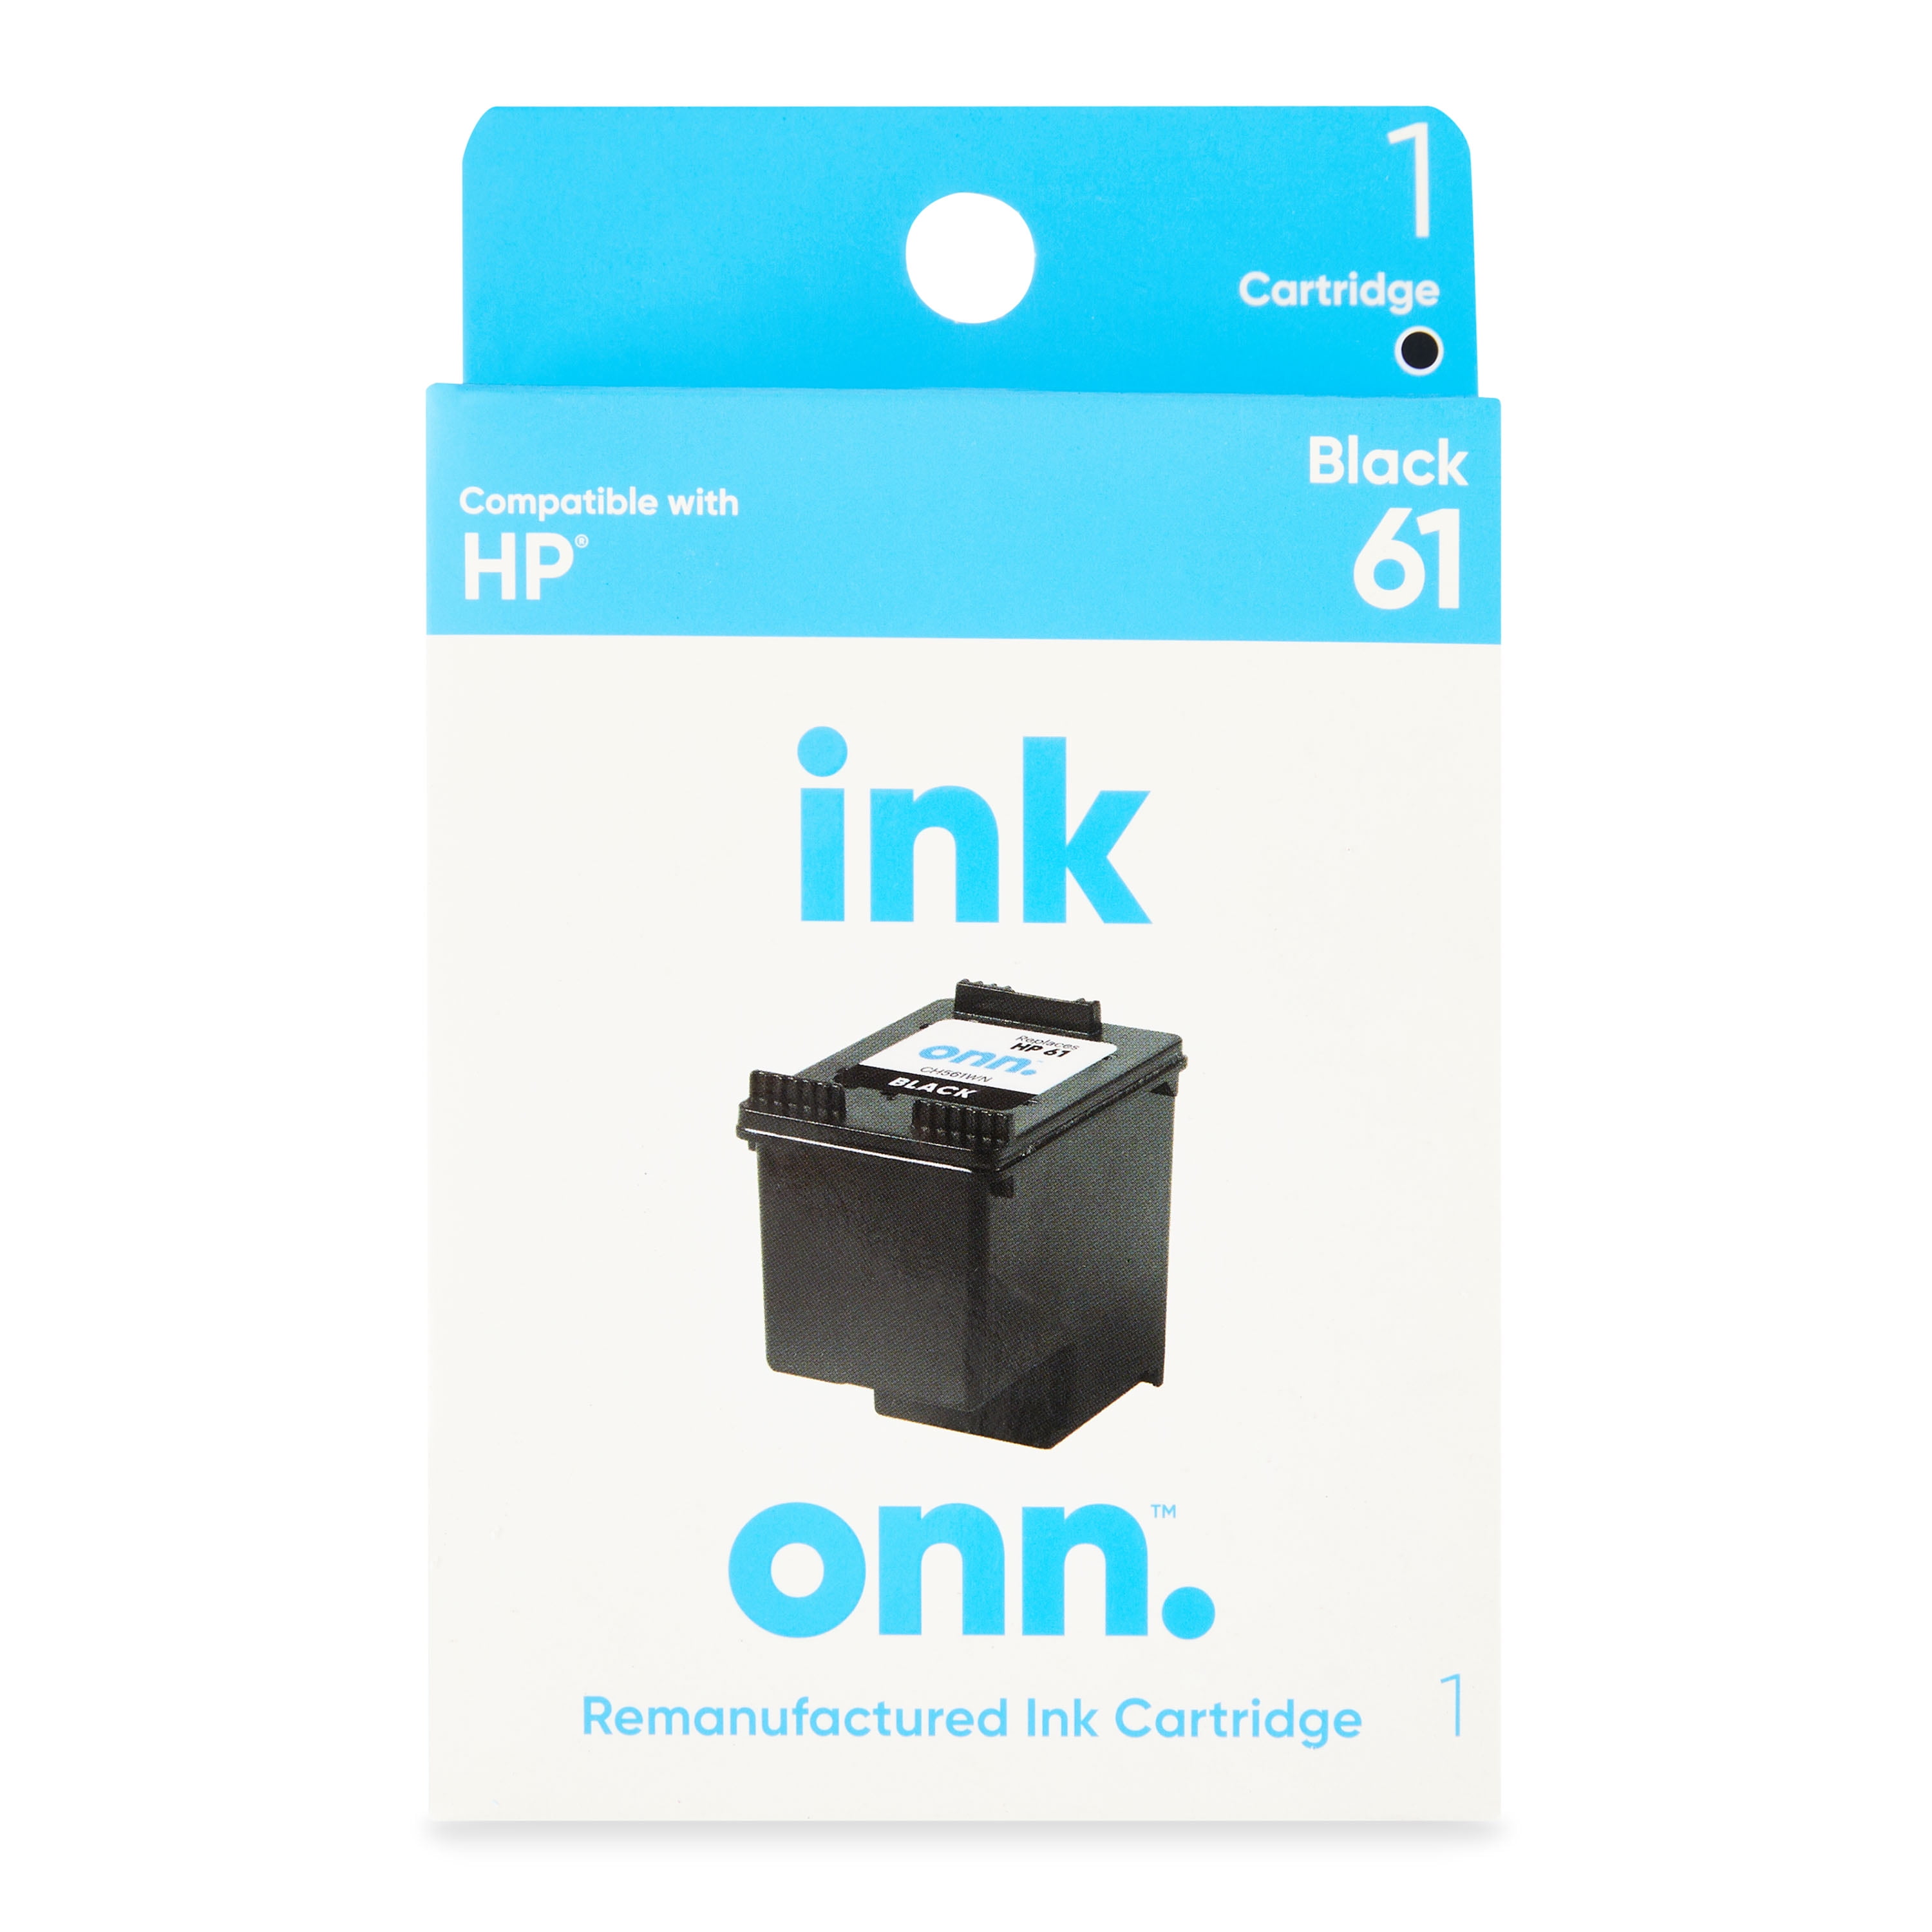 onn. Remanufactured Ink Cartridge, HP 61 Black